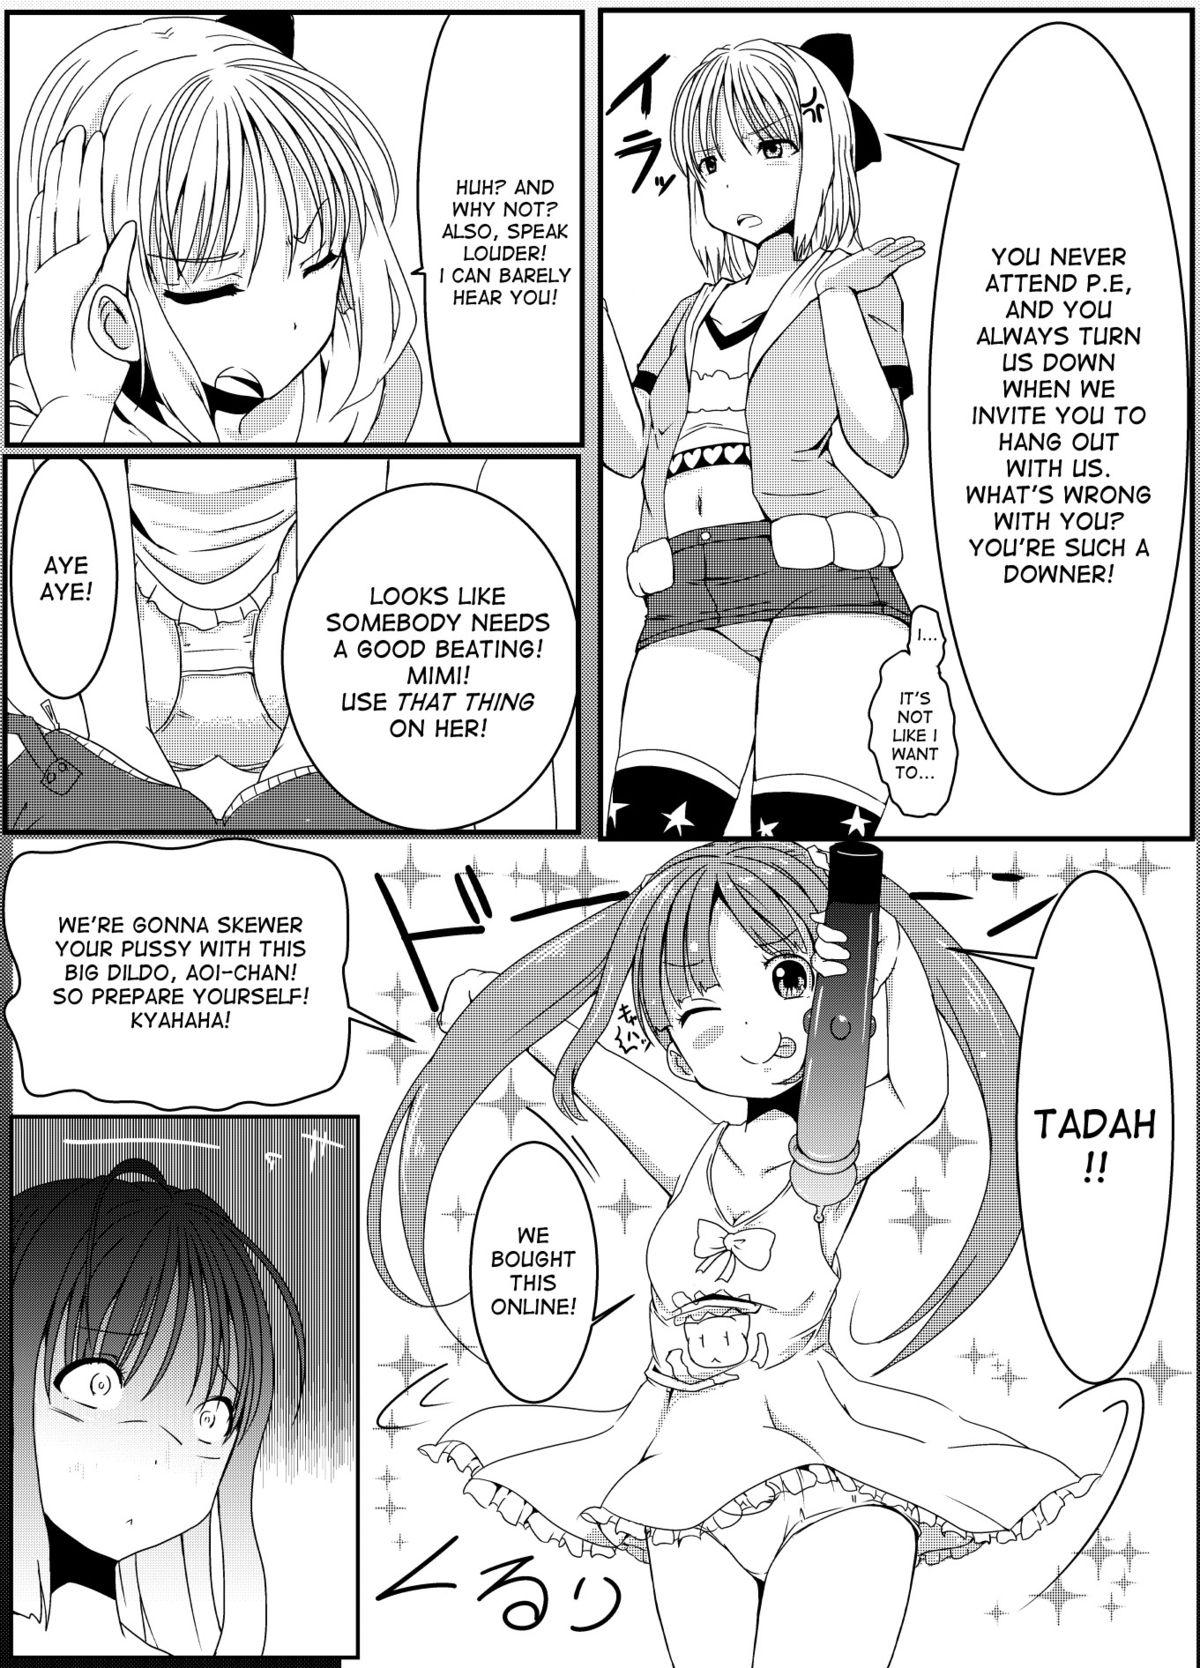 Anoko no Kokan no Himitsu | The Secret of the Crotch of that Girl 3